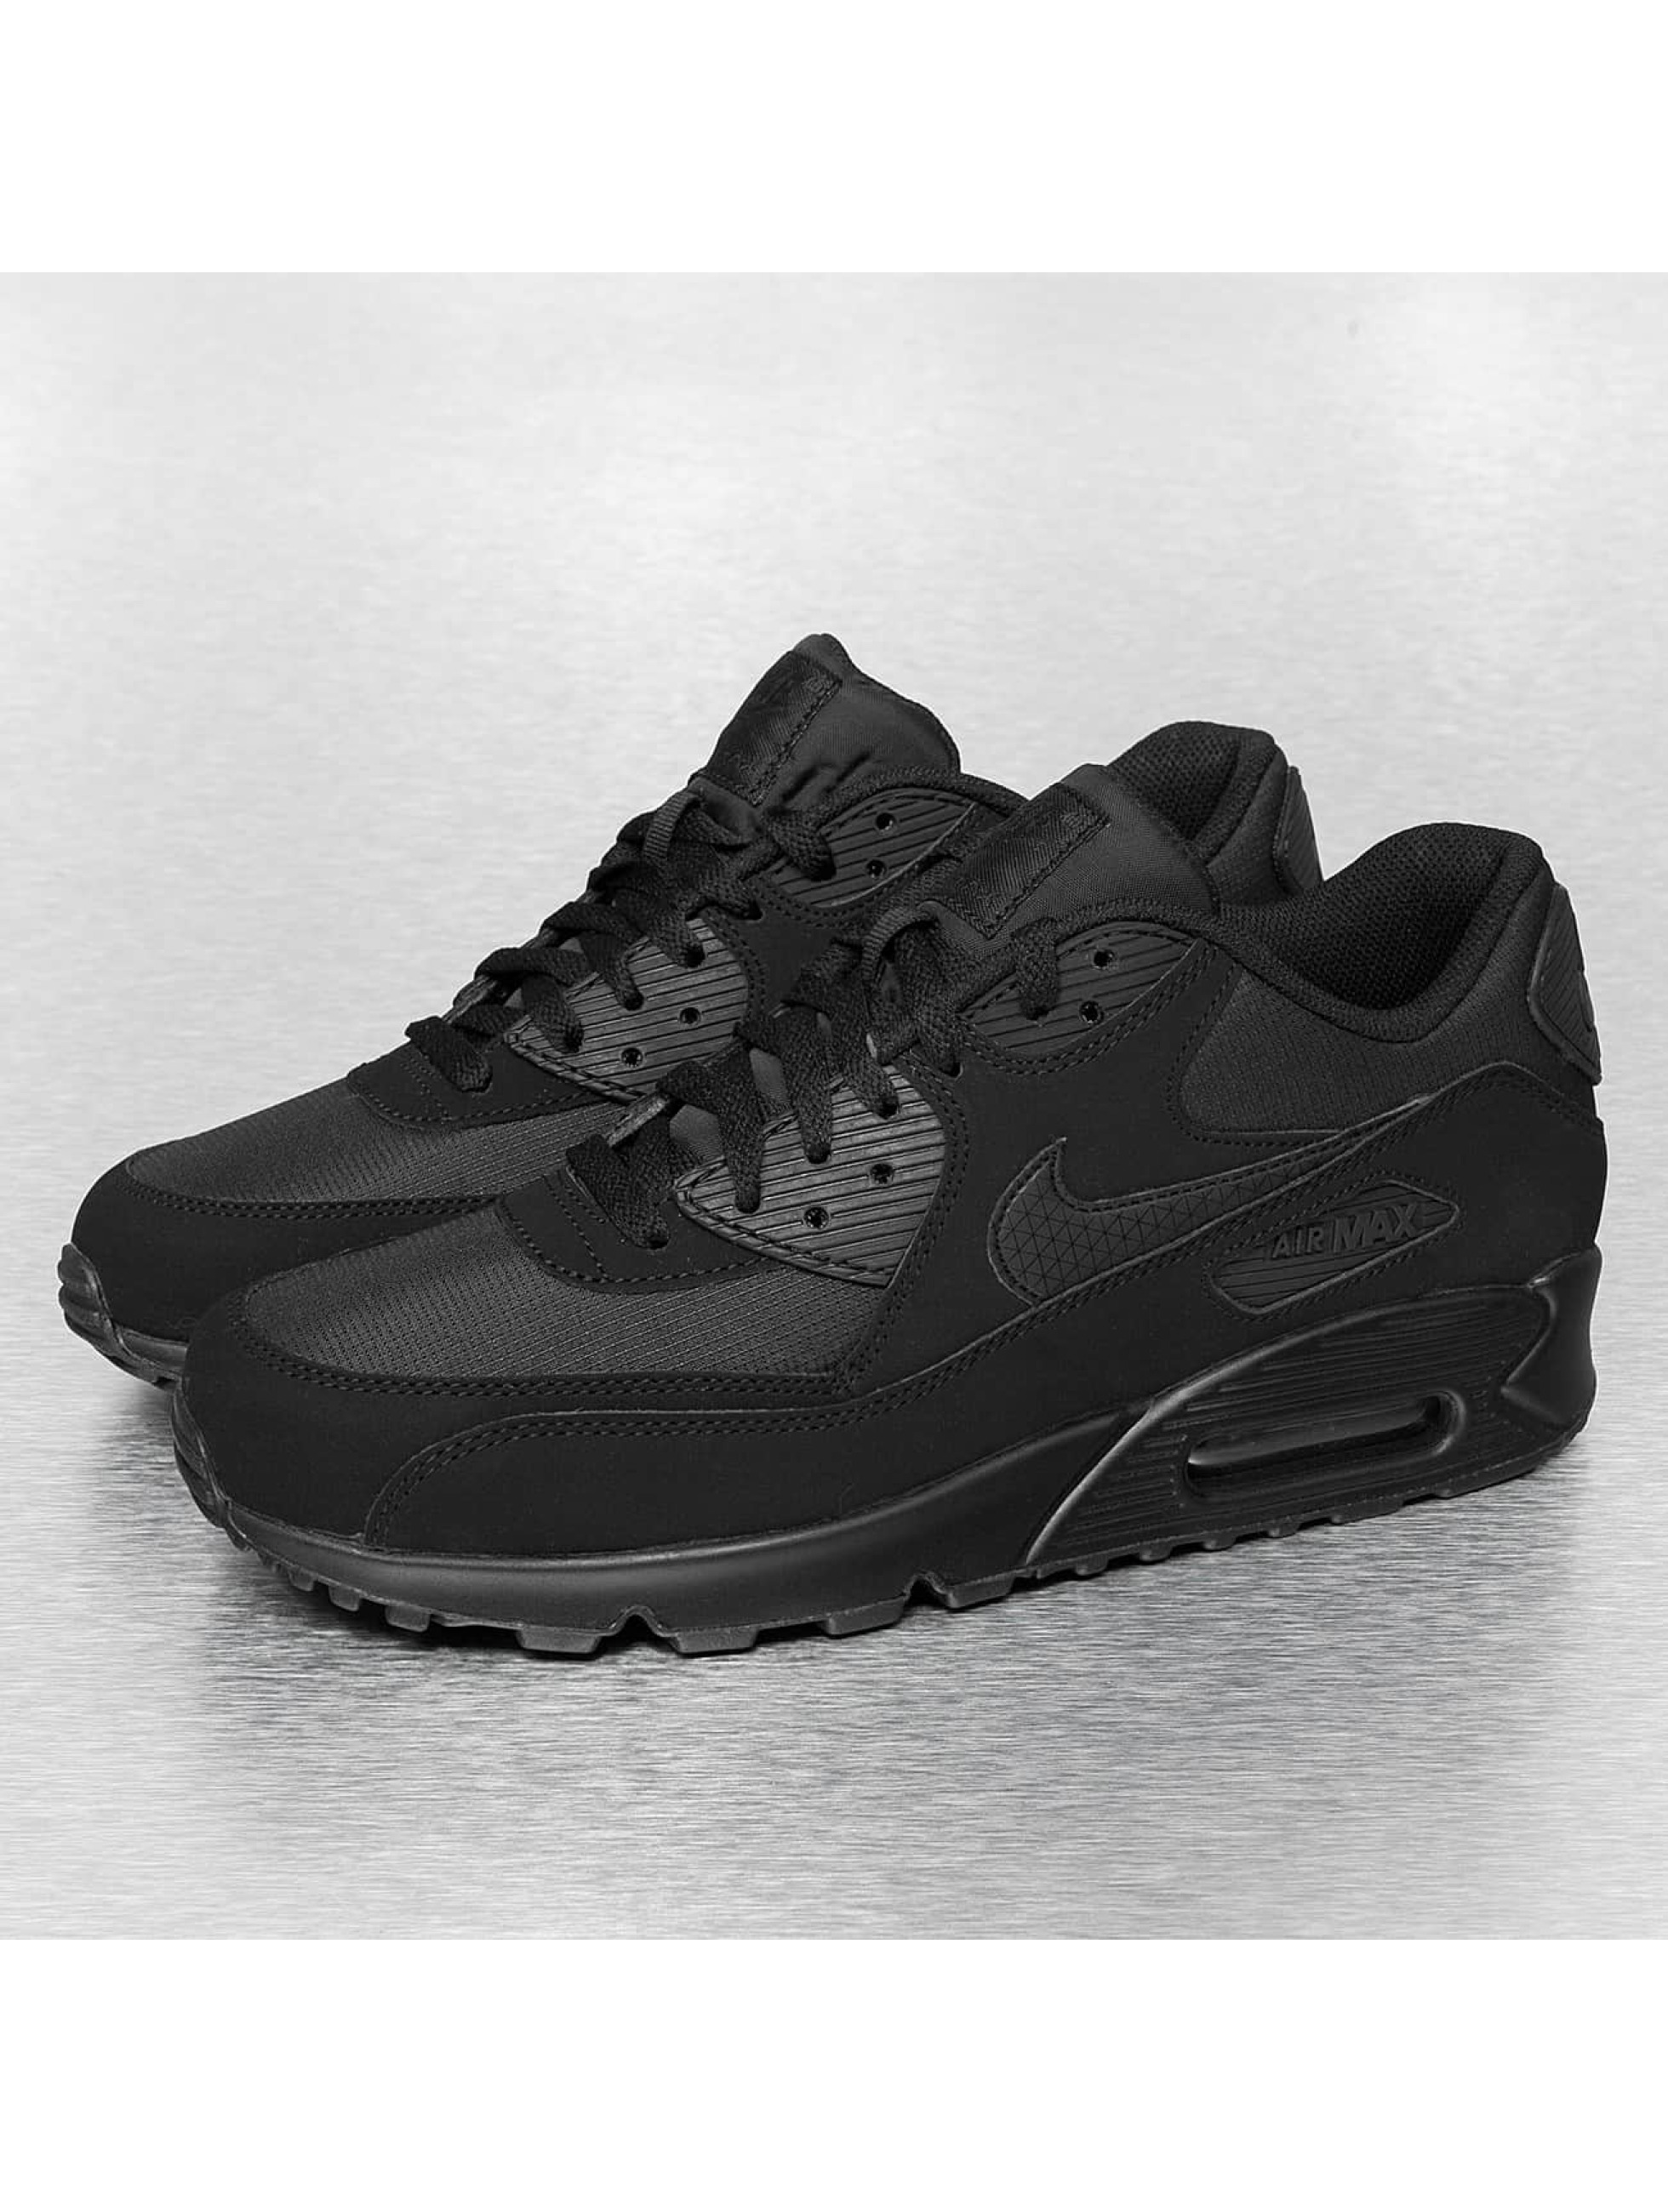 Sneaker Air Max 90 Essential in schwarz